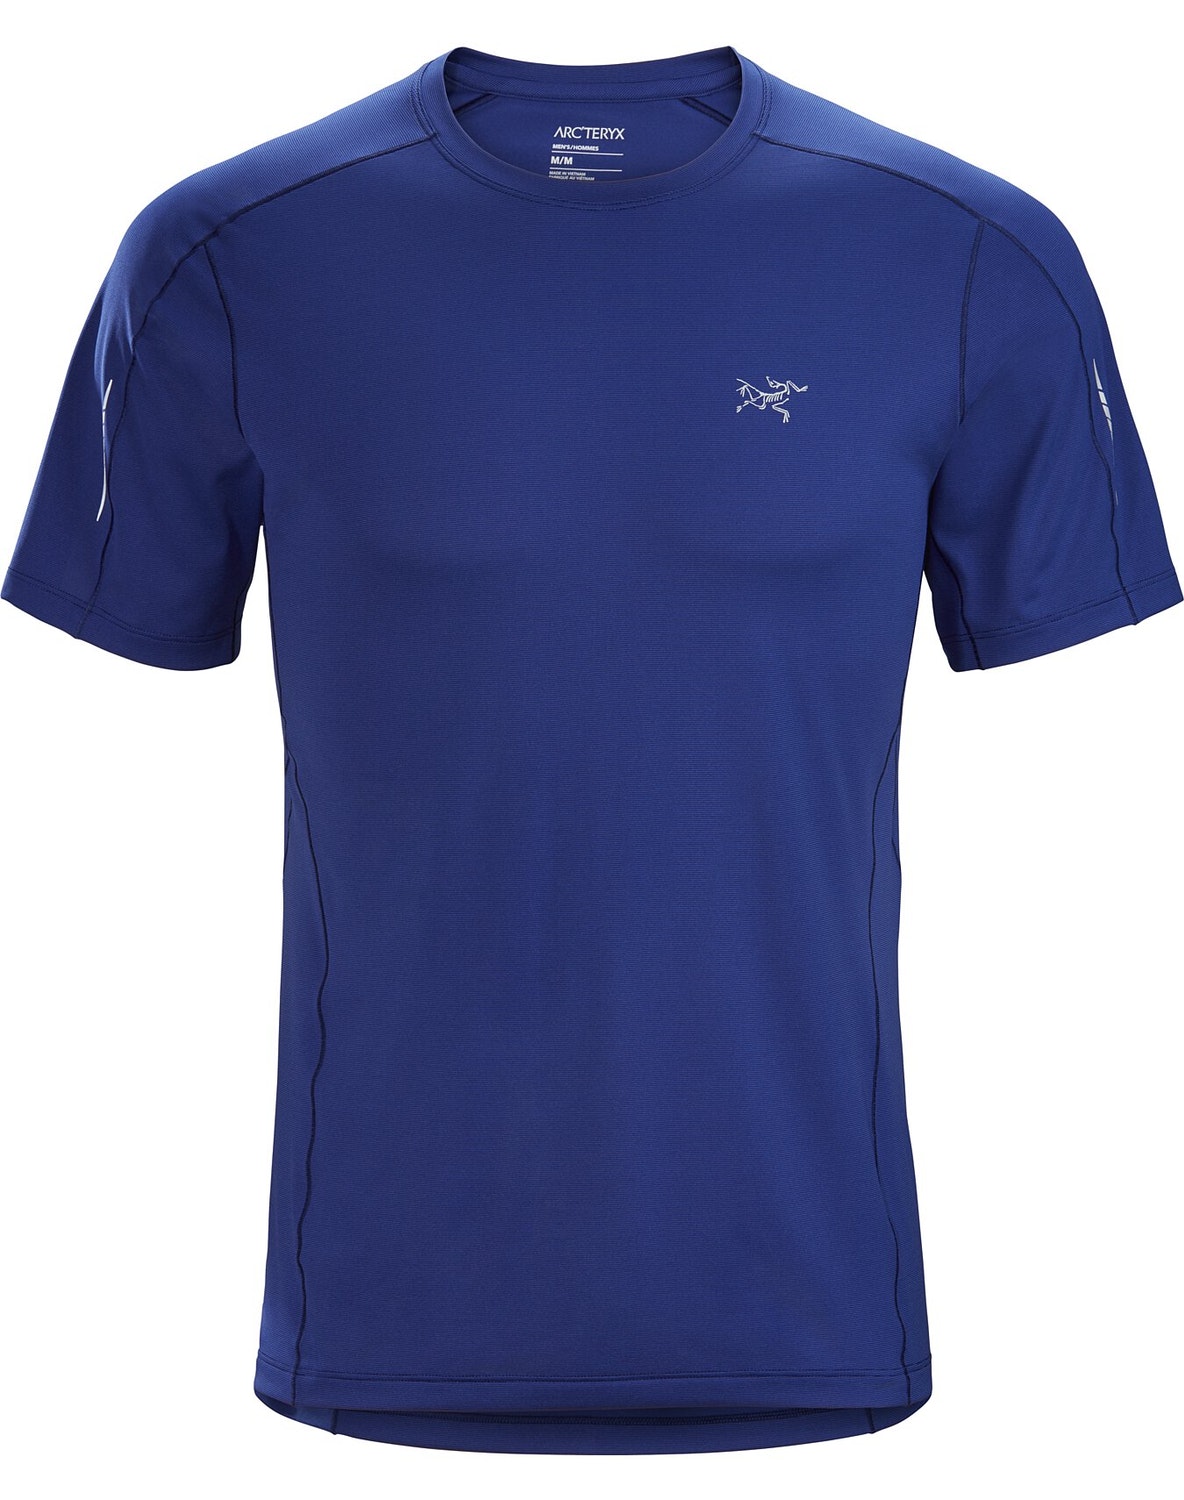 T-shirt Arc'teryx Motus Crew Neck Uomo Blu Reale - IT-33763137